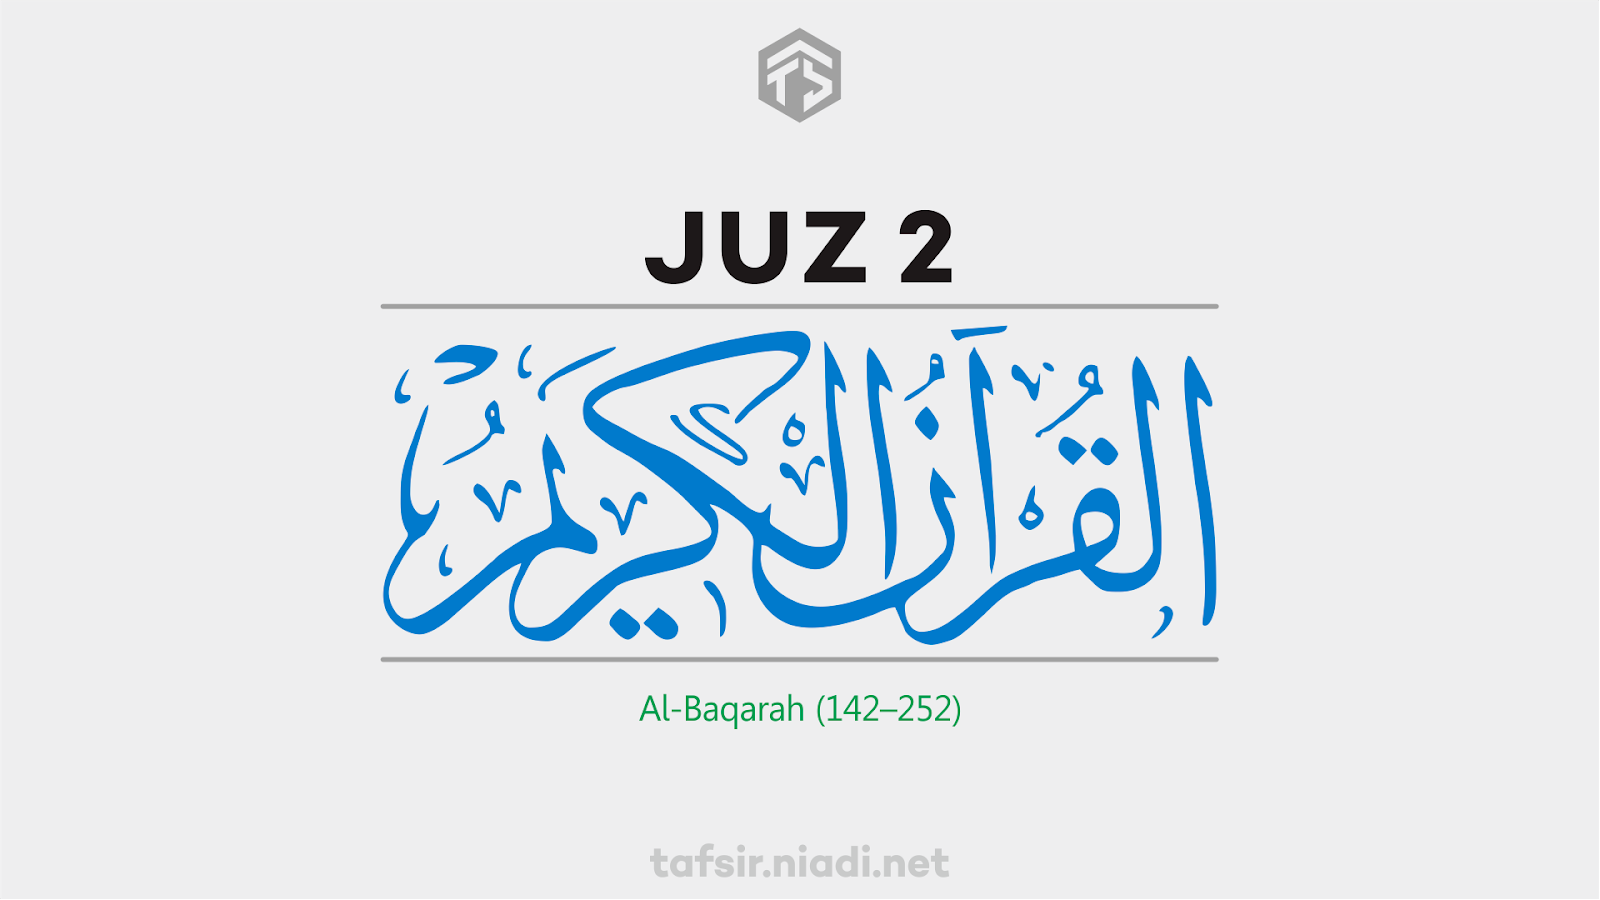 Baca online Alquran Juz 2, Surah Al-Baqarah ayat 142–252. Website Alquran online cepat, ringan, dan hemat kuota, tafsir.niadi.net